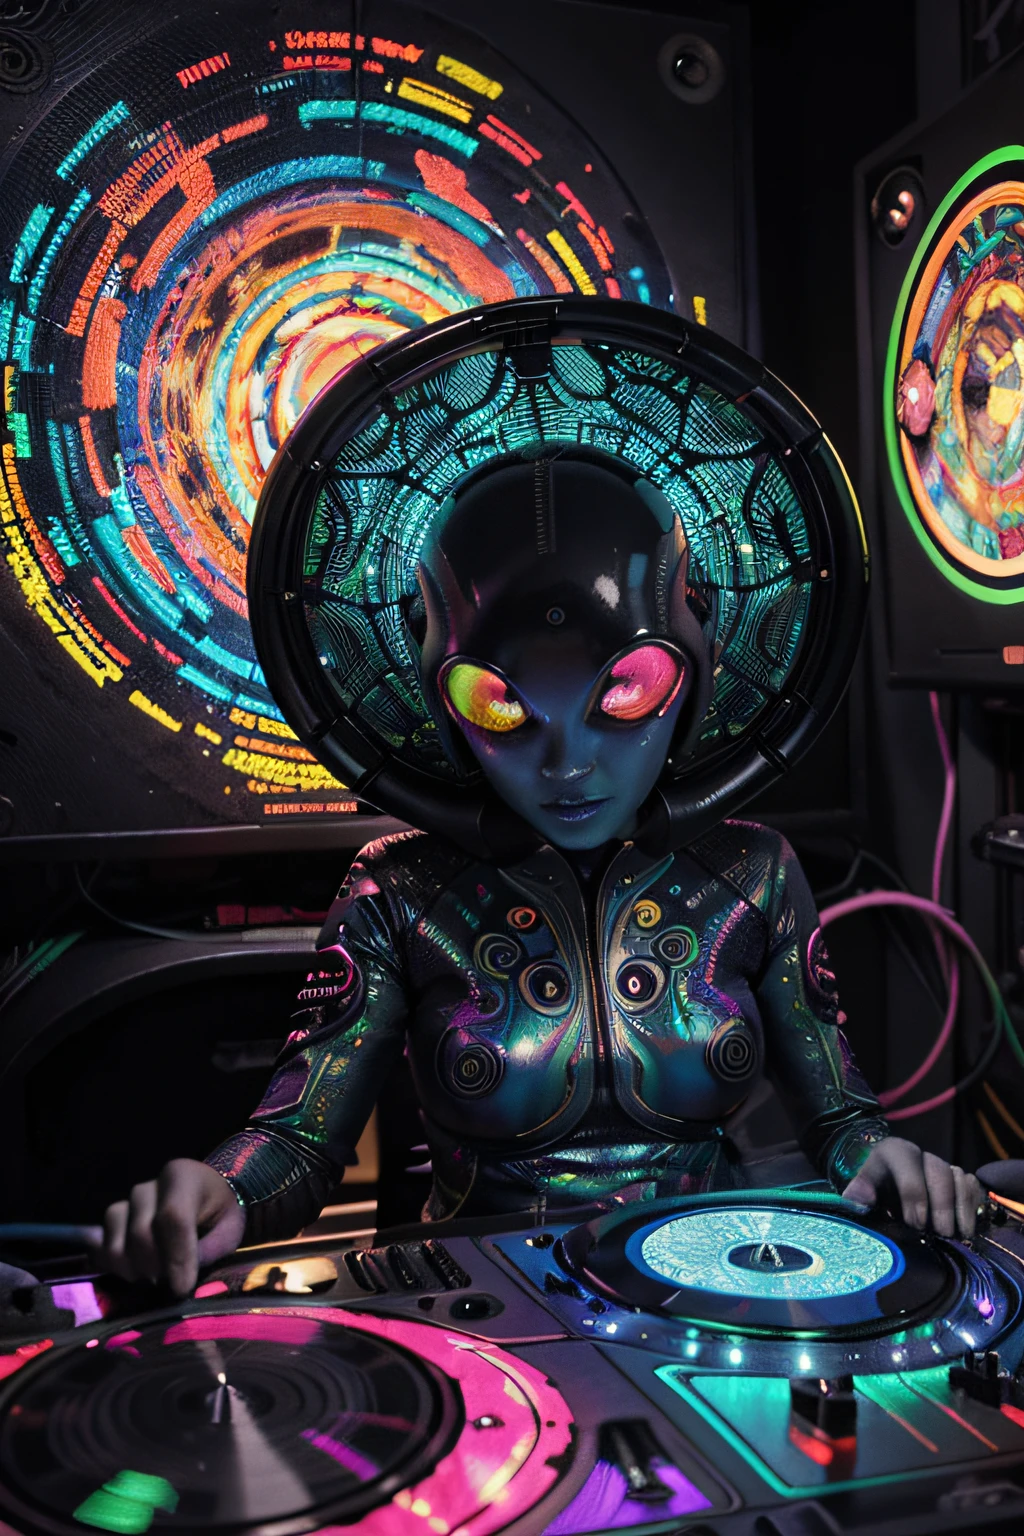 Papel de parede Alien DJ Psy Trance, ciborgue , Stimulus to Art, cores vibrantes, Detailed alien creature, Swirling psychedelic patterns, neon lights, atmosfera estranha, Estilo de Arte Digital, 8K resolution